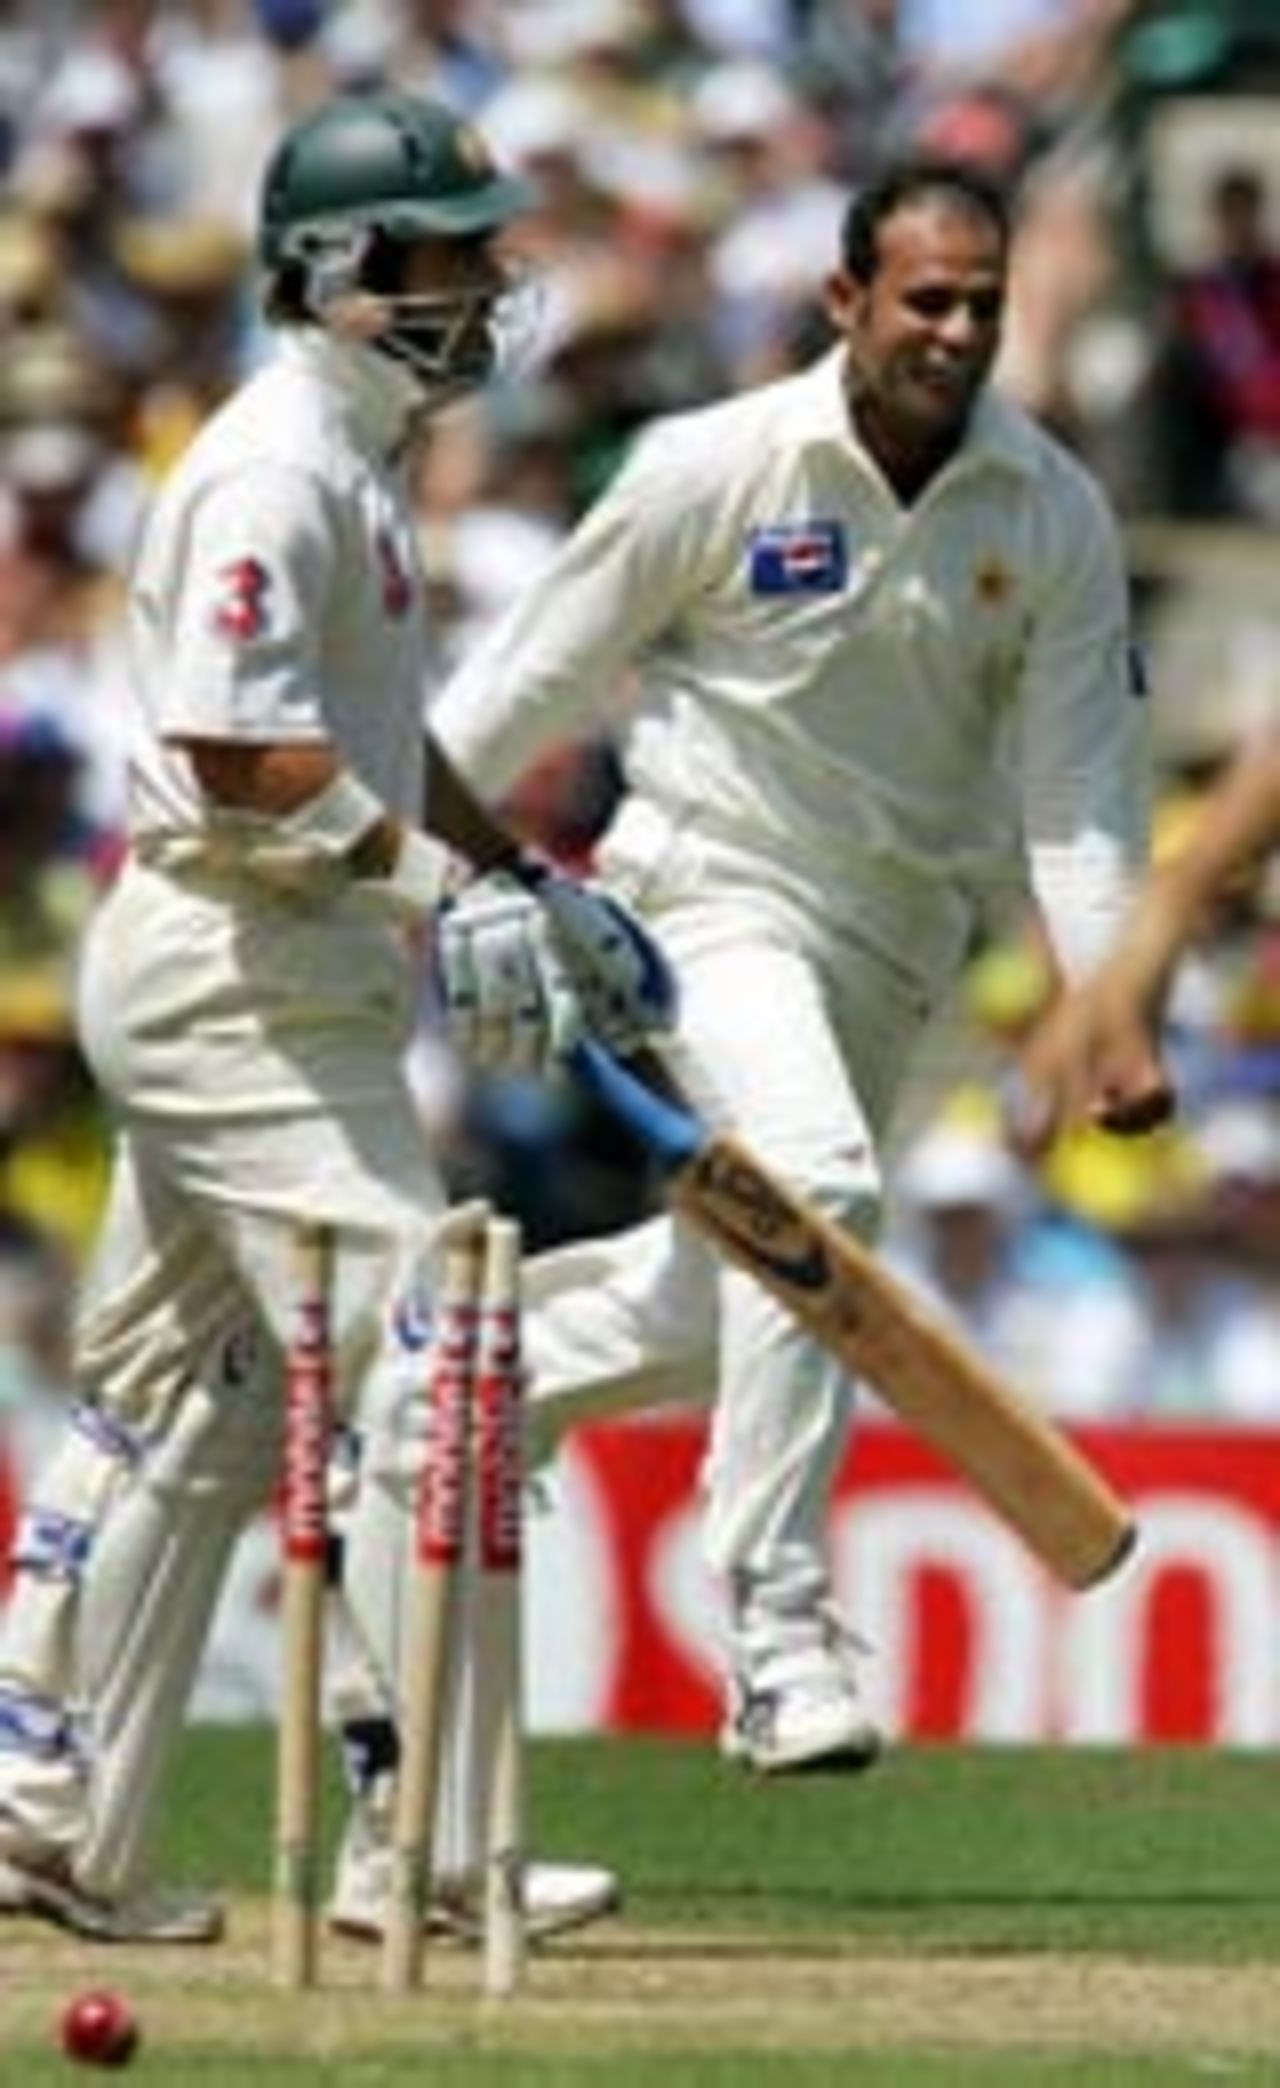 Justin Langer bowled by Naved-ul-Hasan, Australia v Pakistan, 3rd Test, Sydney, January 3, 2005